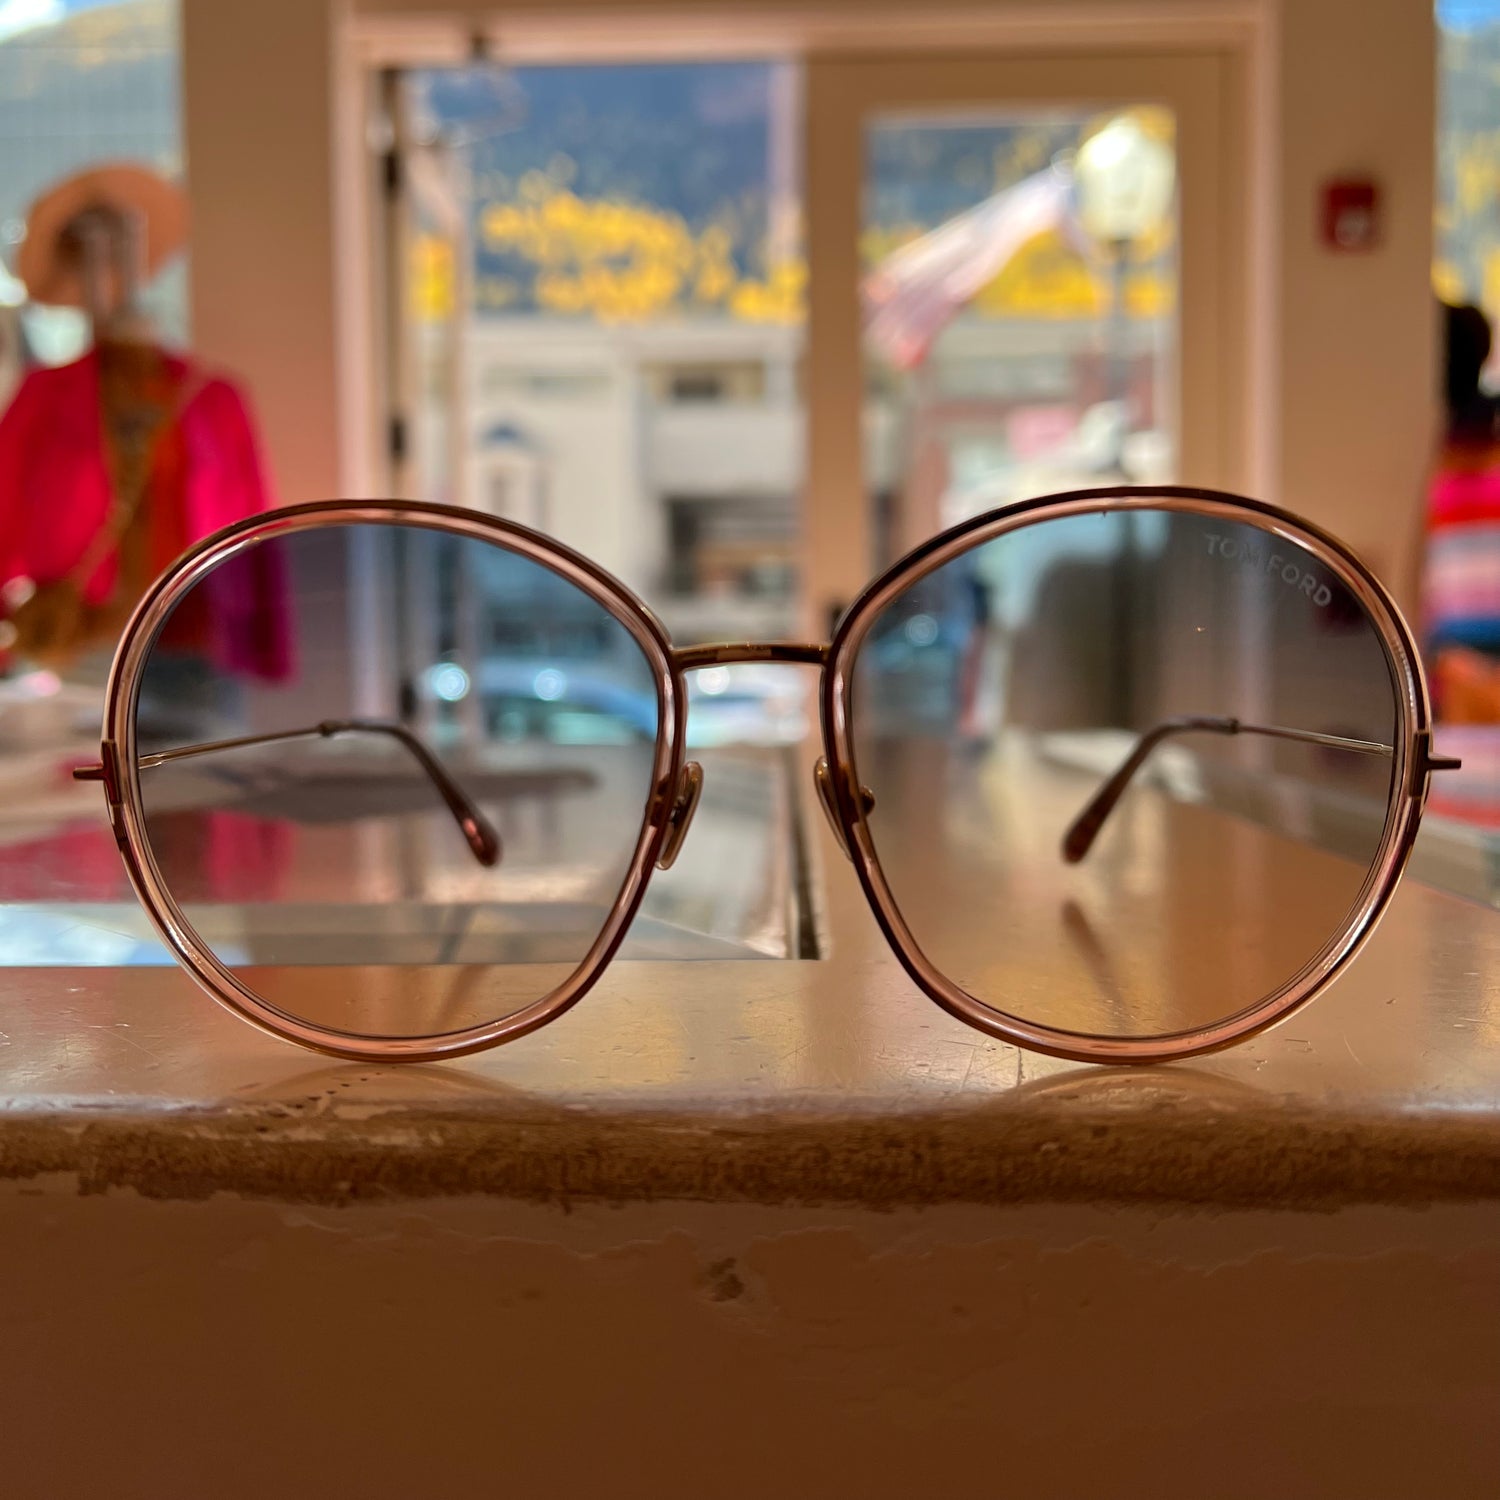 Tom Ford Hunter Sunglasses – Two Skirts